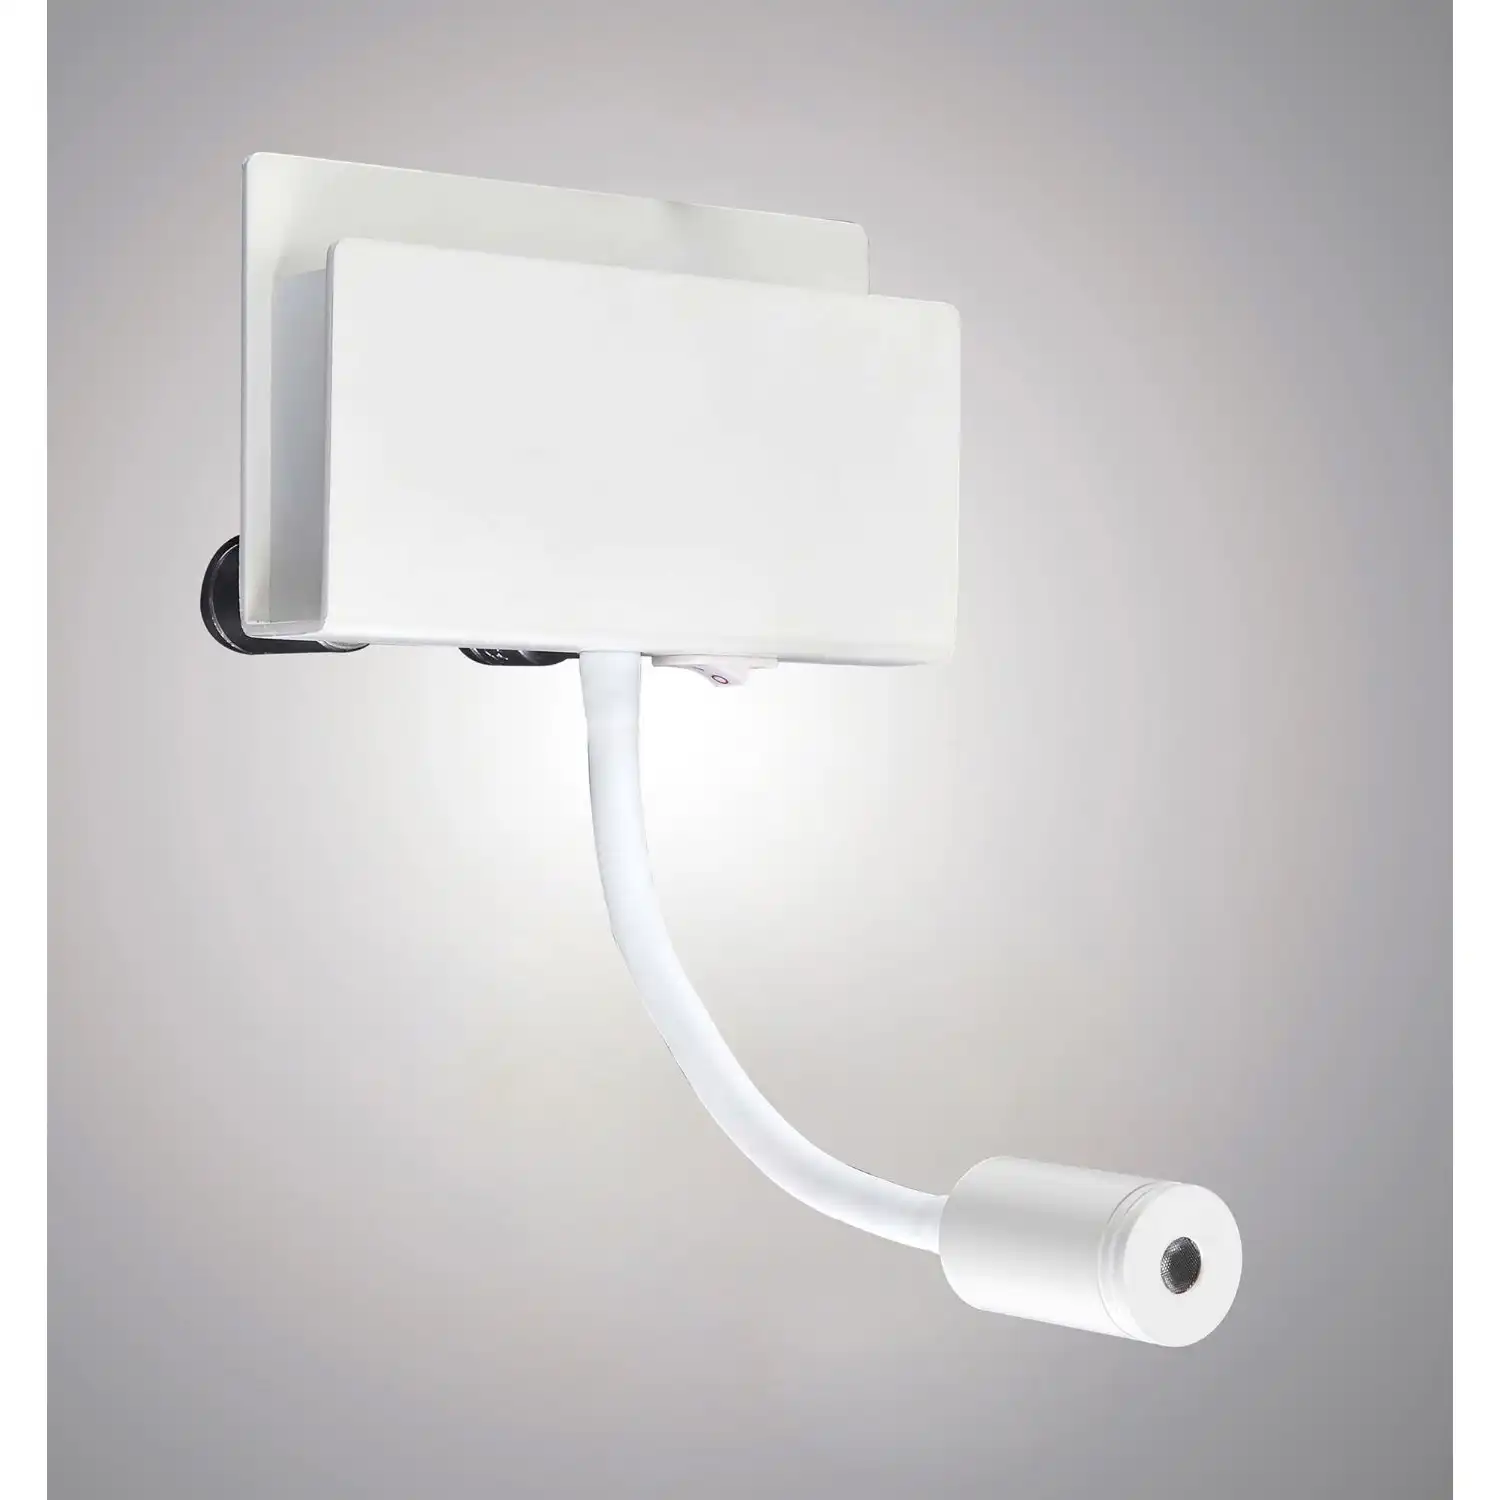 Cabarete Wall Light Rectangular 2 x 3W LED 3000K, 470lm, Switched White, 3yrs Warranty